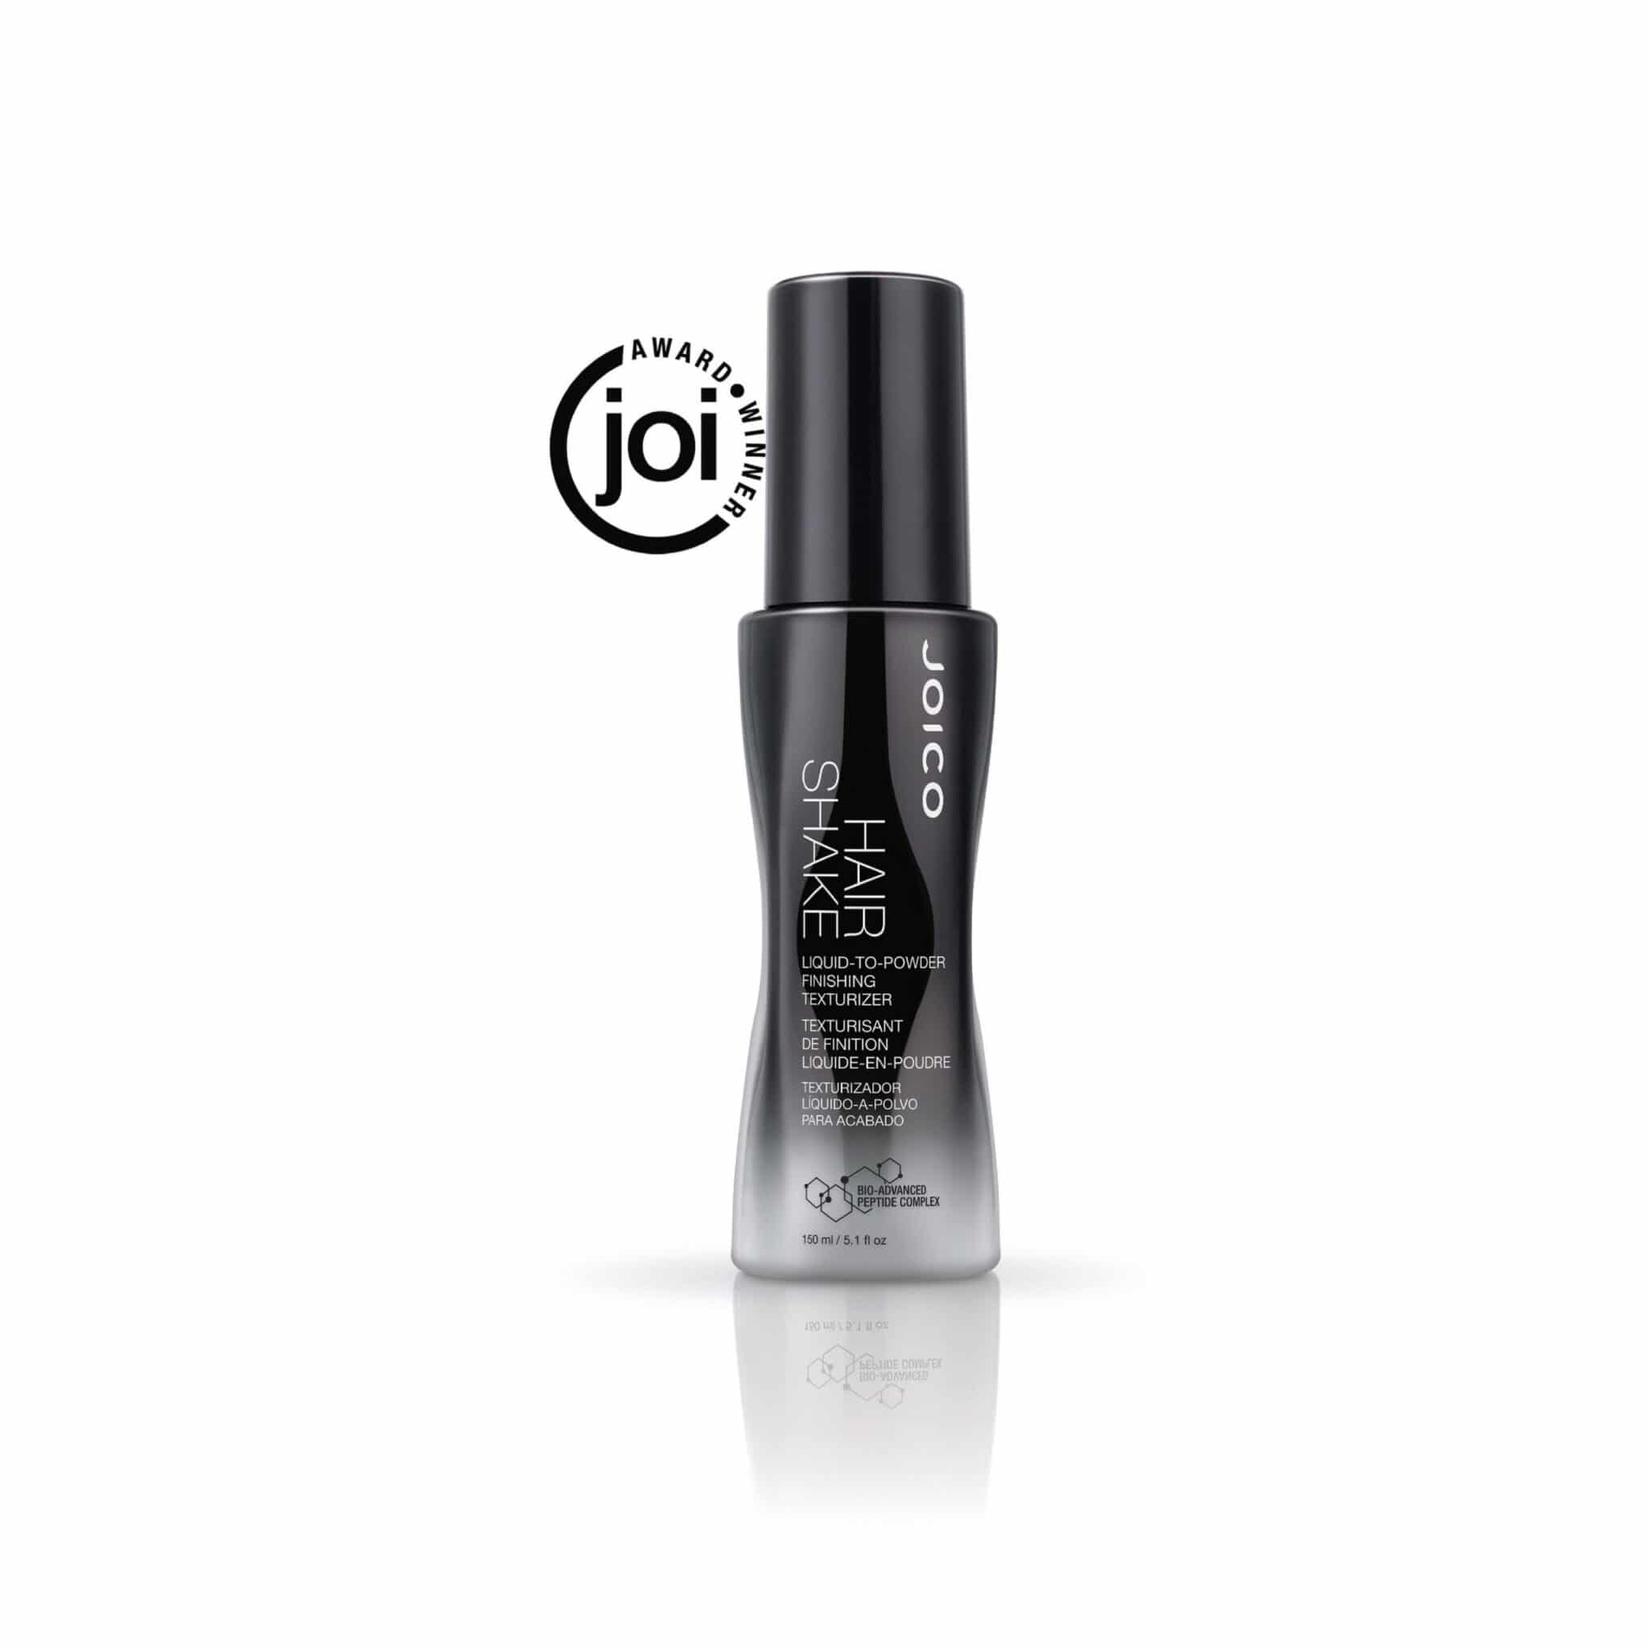 JOICO Prah za volumen i teksturu kose HairShake Liquid-to-Powder Texturizer 150ml